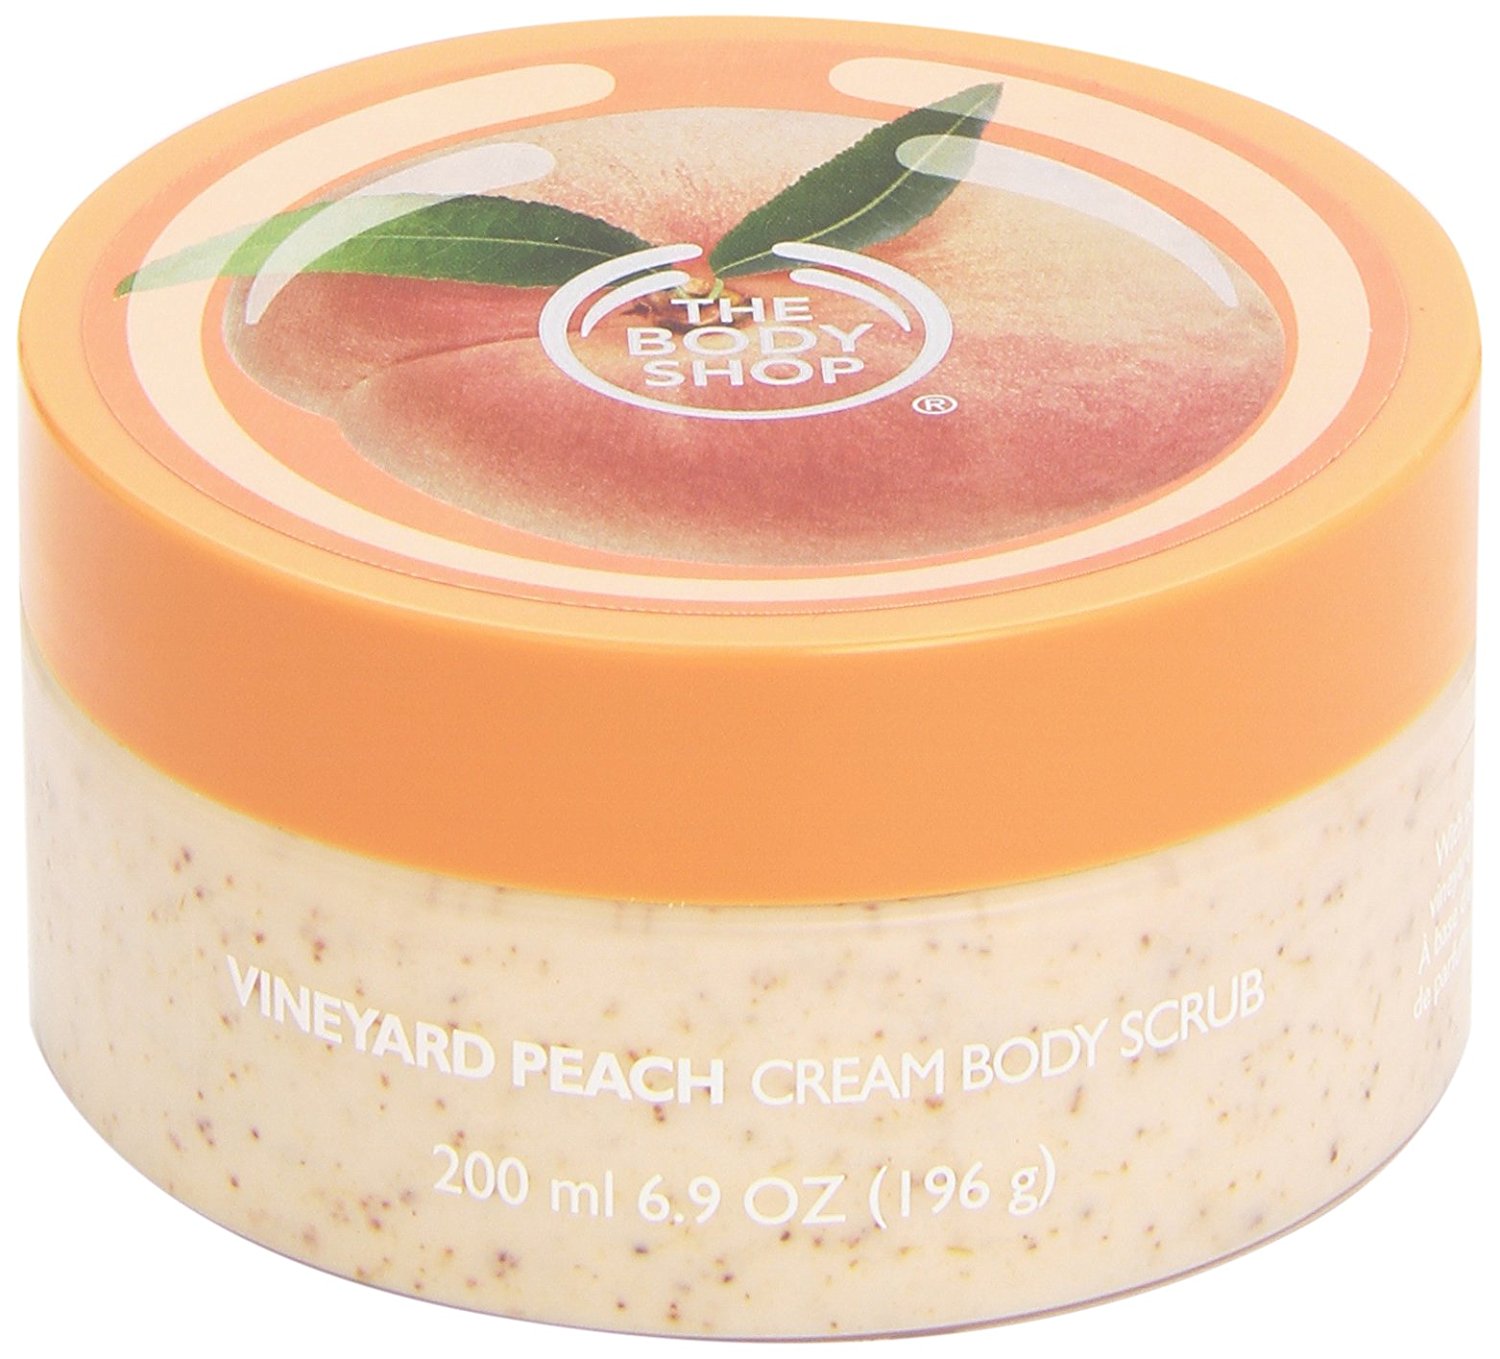 Amazon.com : The Body Shop Vineyard Peach Body Scrub, 6.9 Oz : The ...